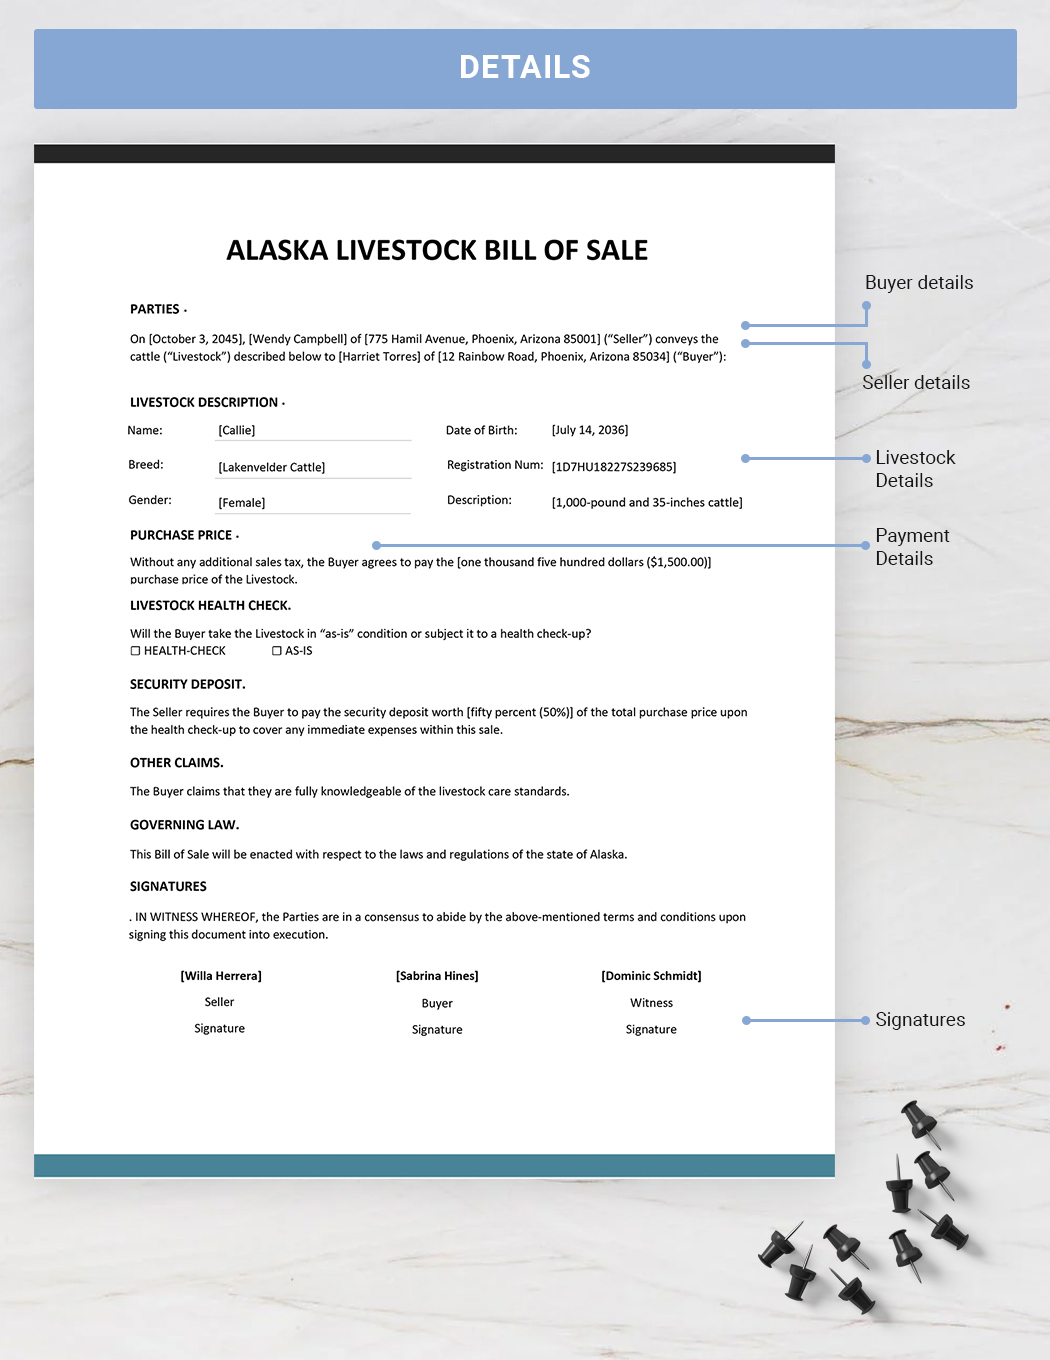 Alaska Livestock Bill of Sale Template